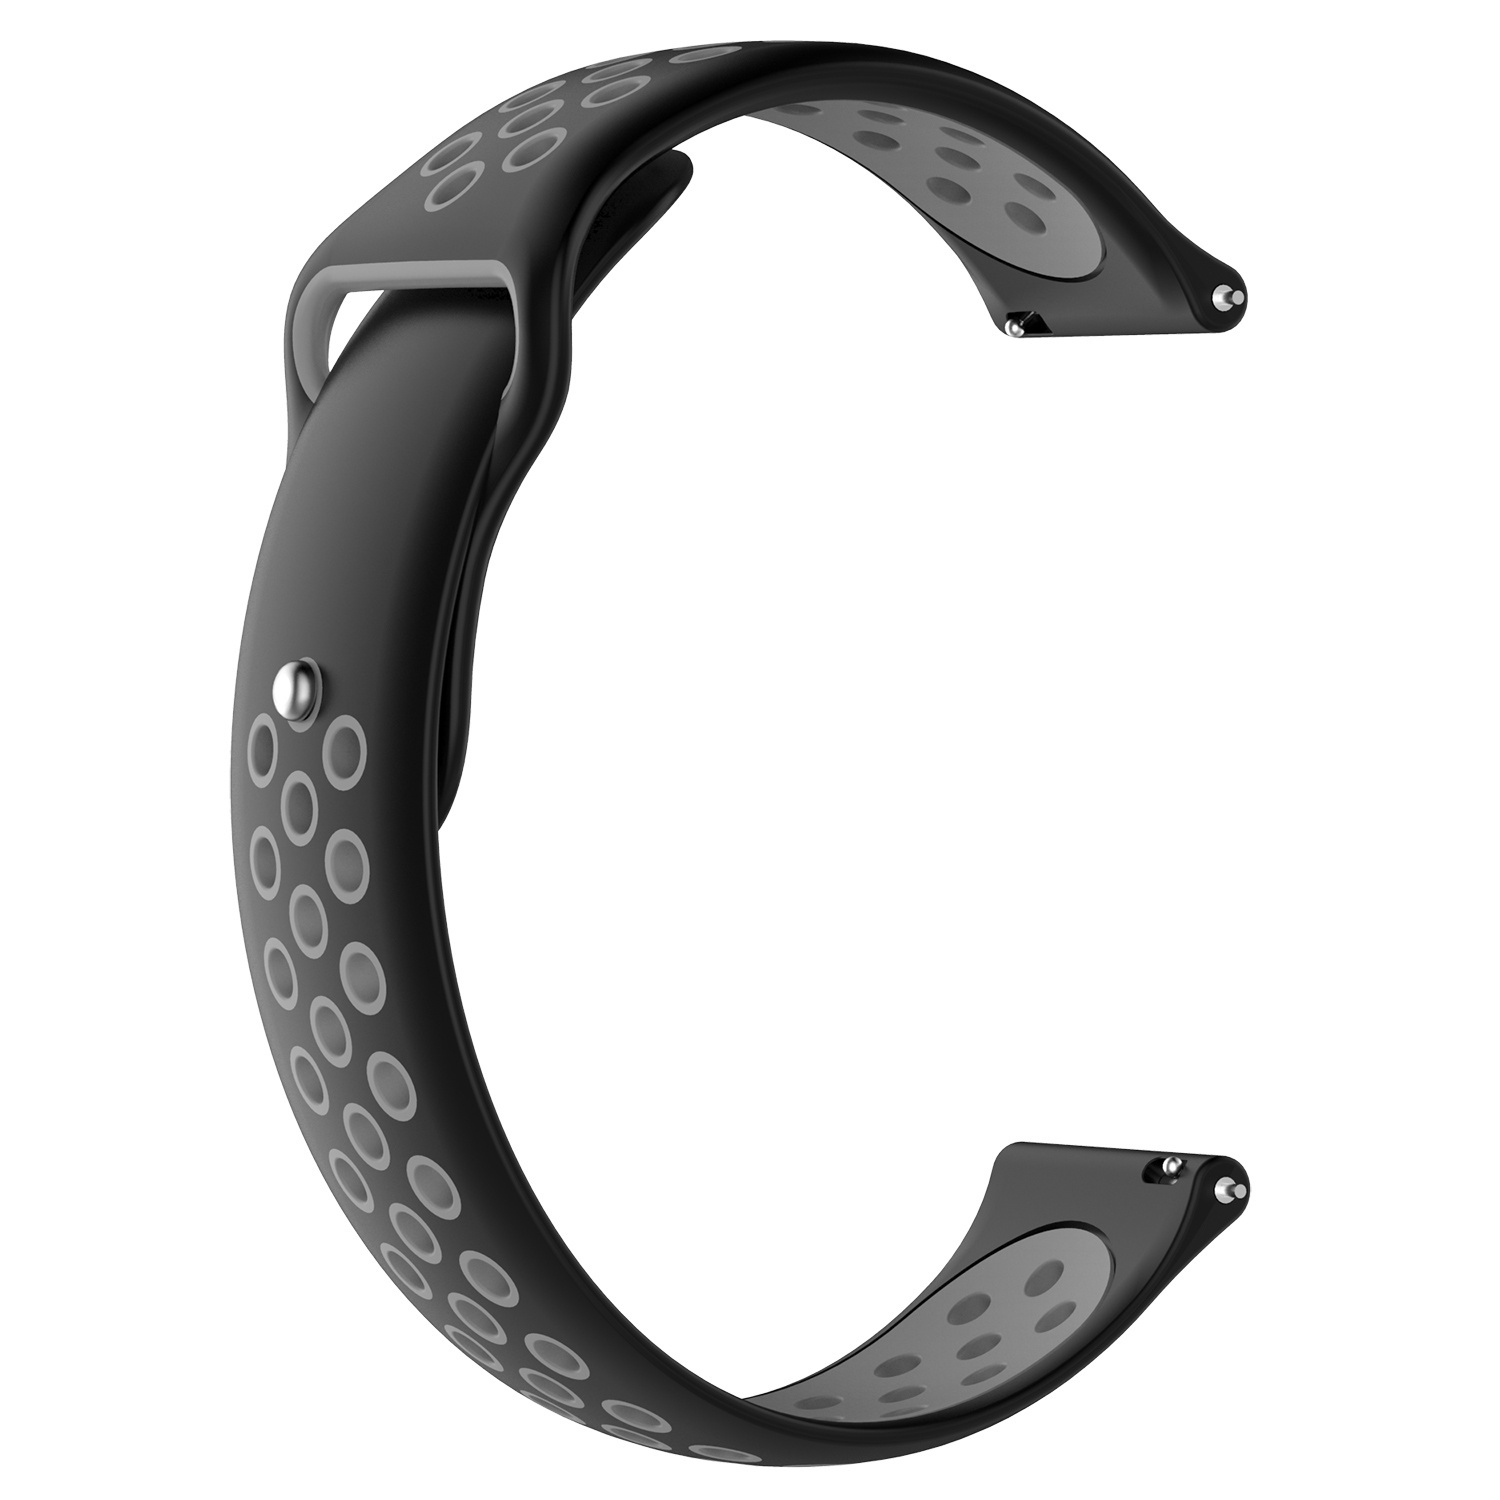 Cinturino doppio sport per Samsung Galaxy Watch - nero grigio